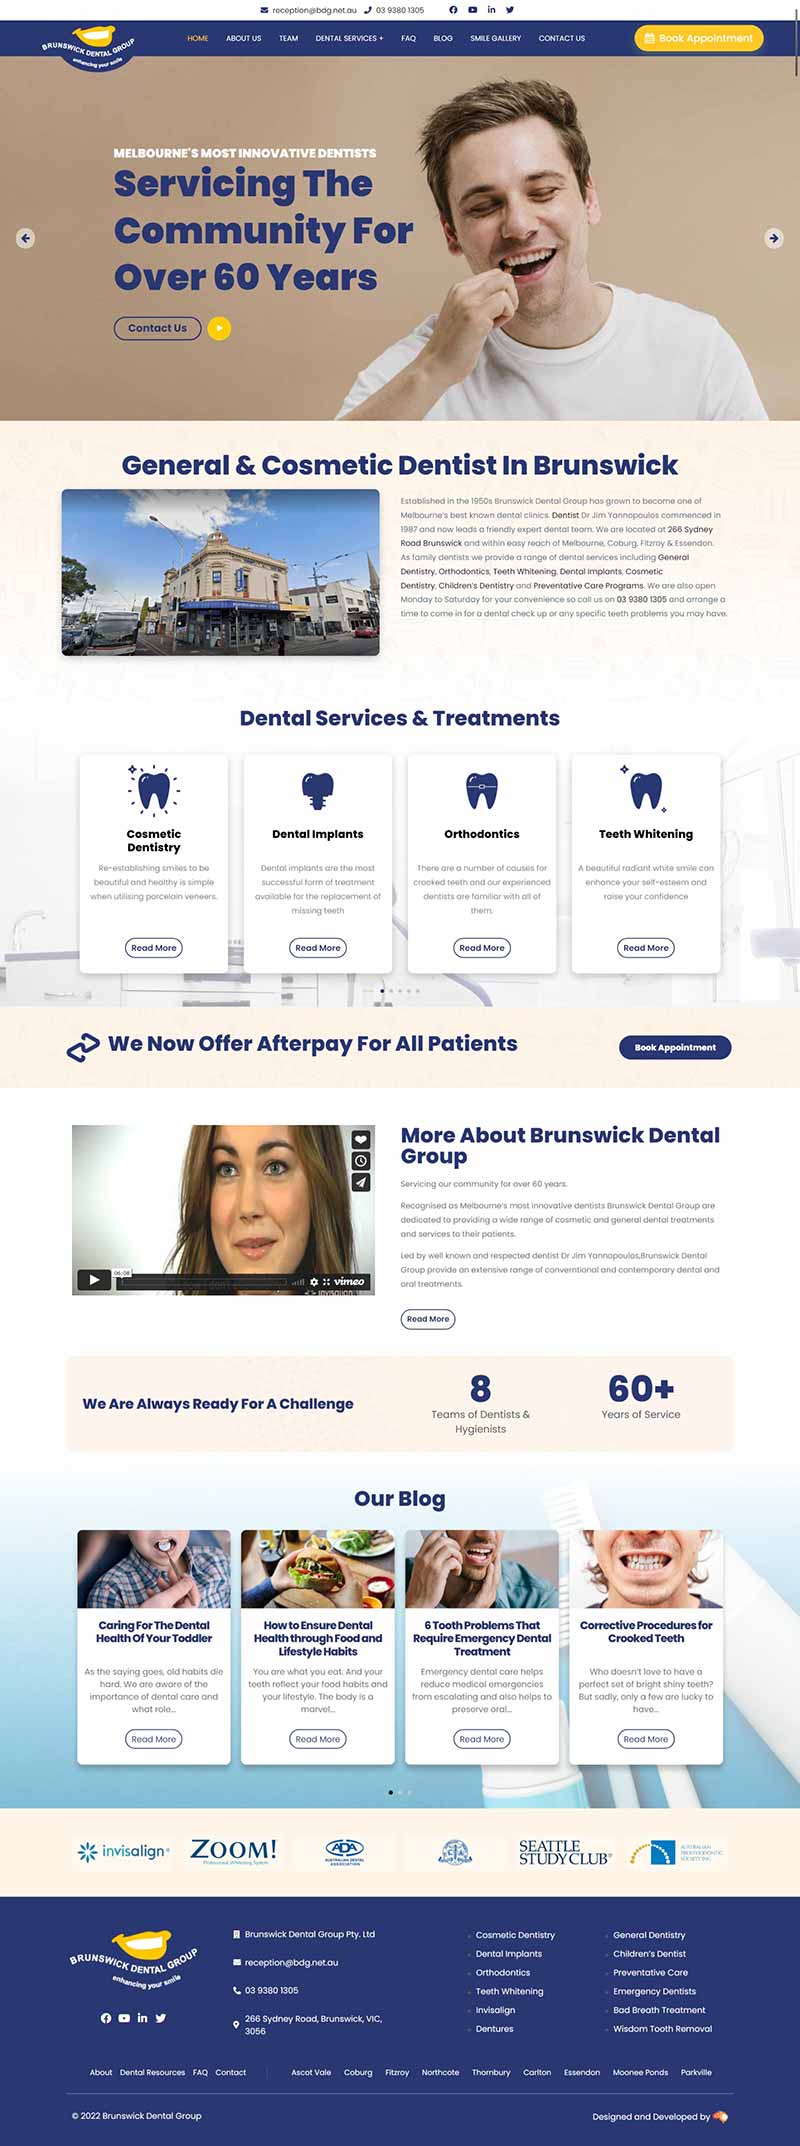 Brunswick Dental Group homepage